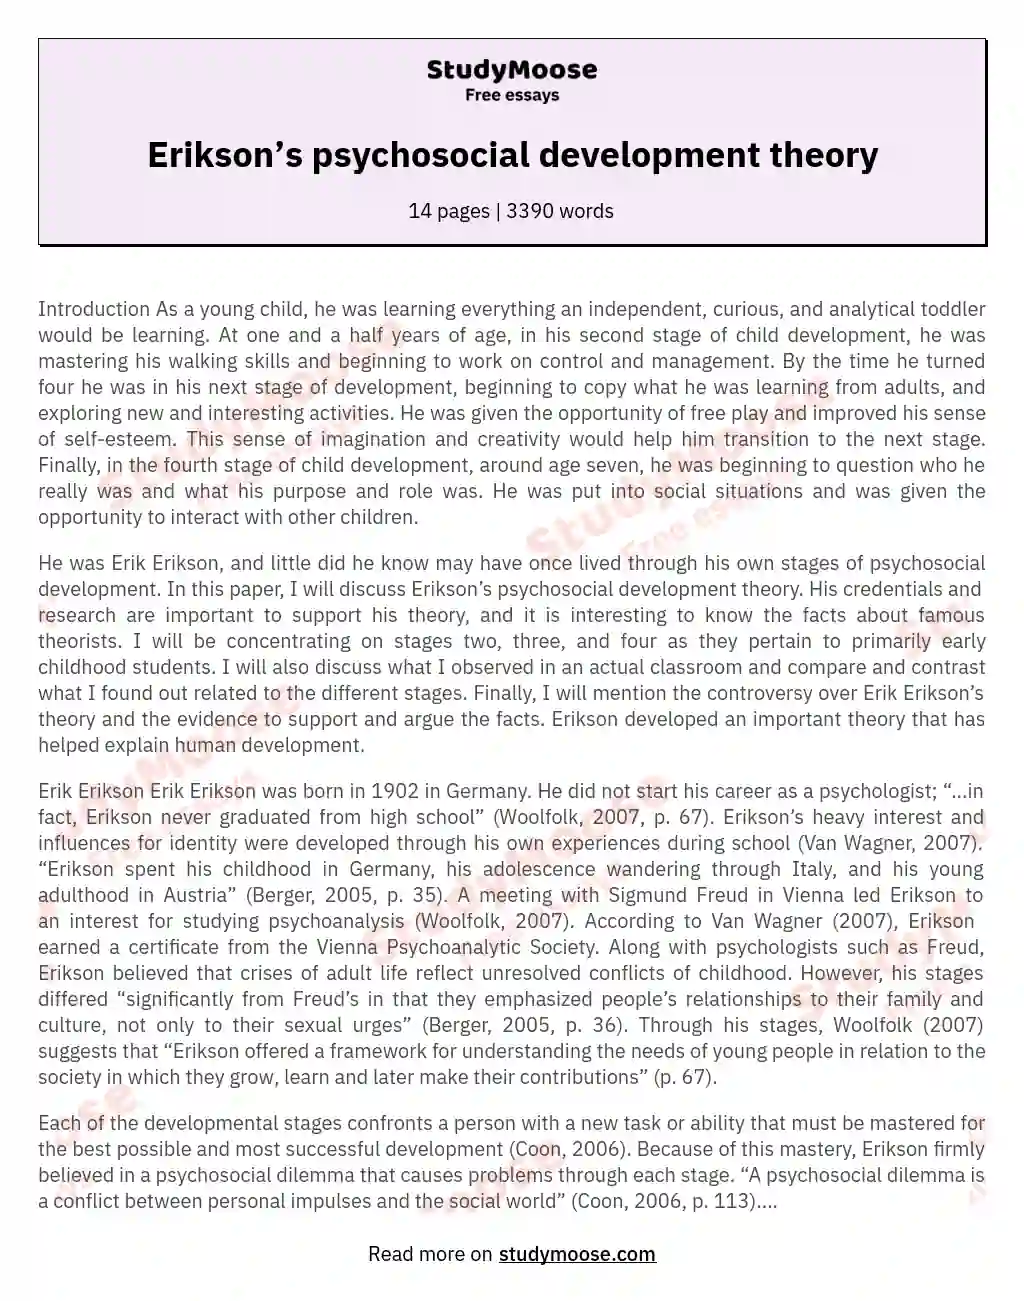 Erikson’s psychosocial development theory